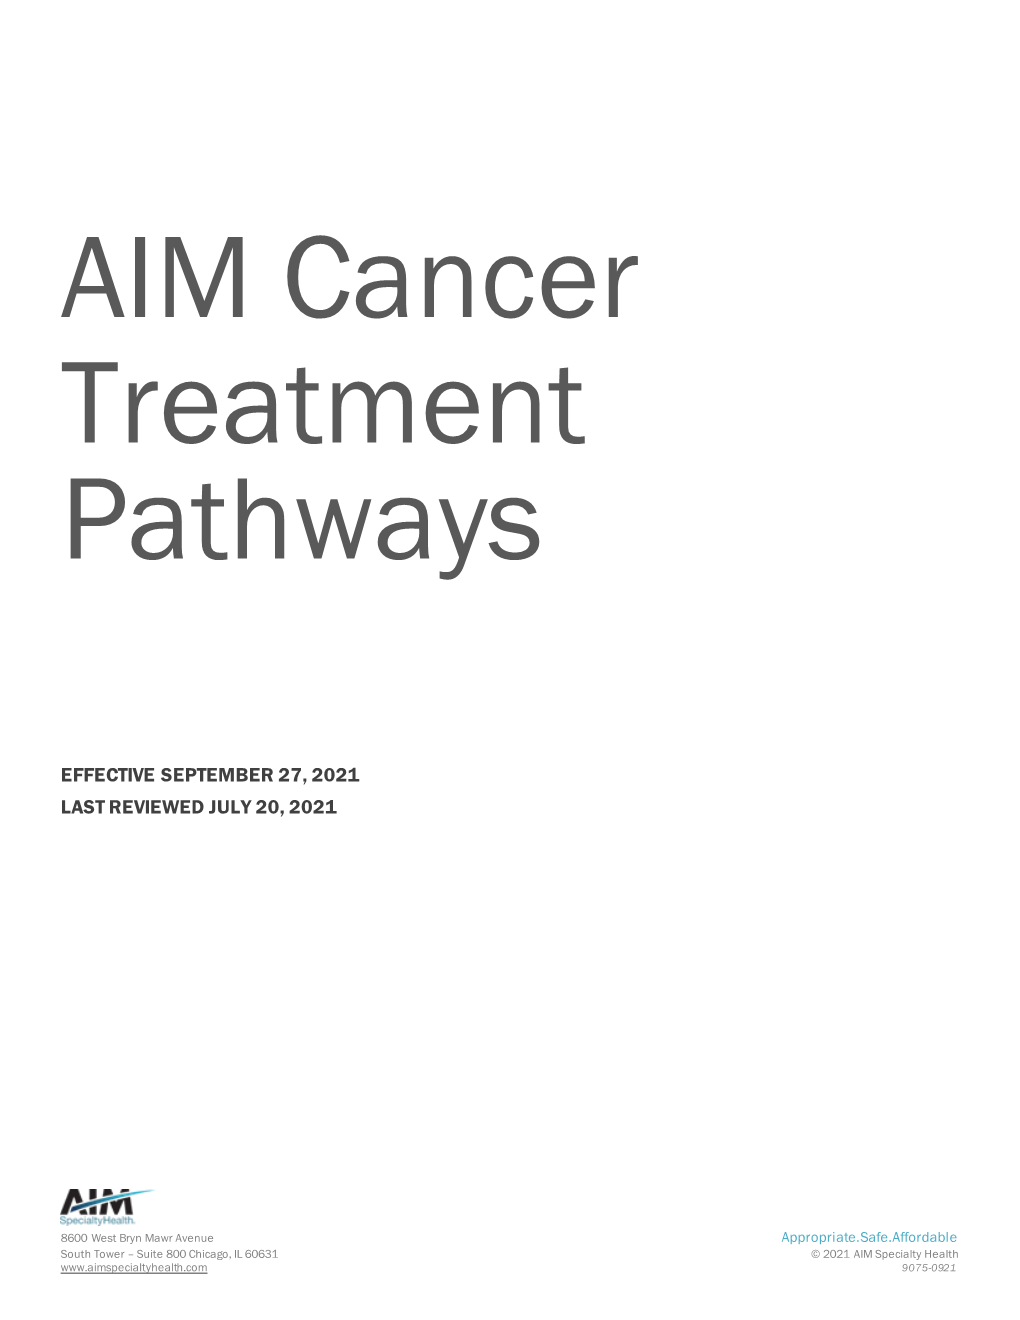 AIM Cancer Treatment Pathways